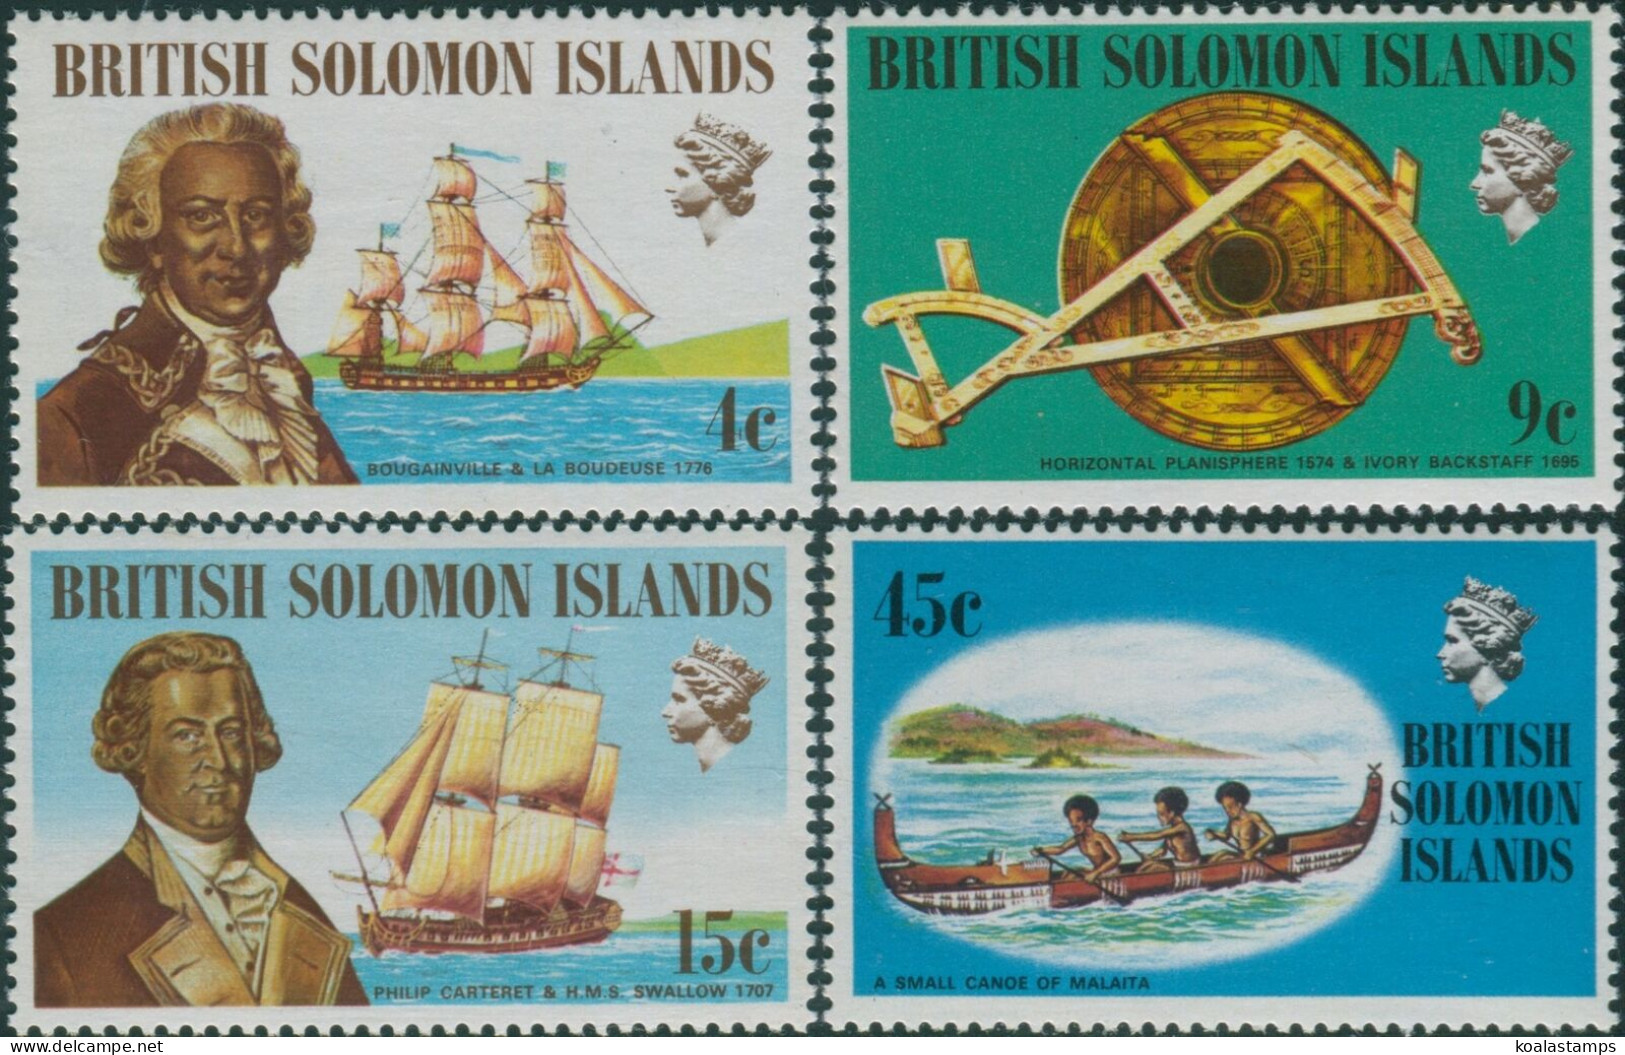 Solomon Islands 1972 SG215-218 Ships And Navigators Set MLH - Salomon (Iles 1978-...)